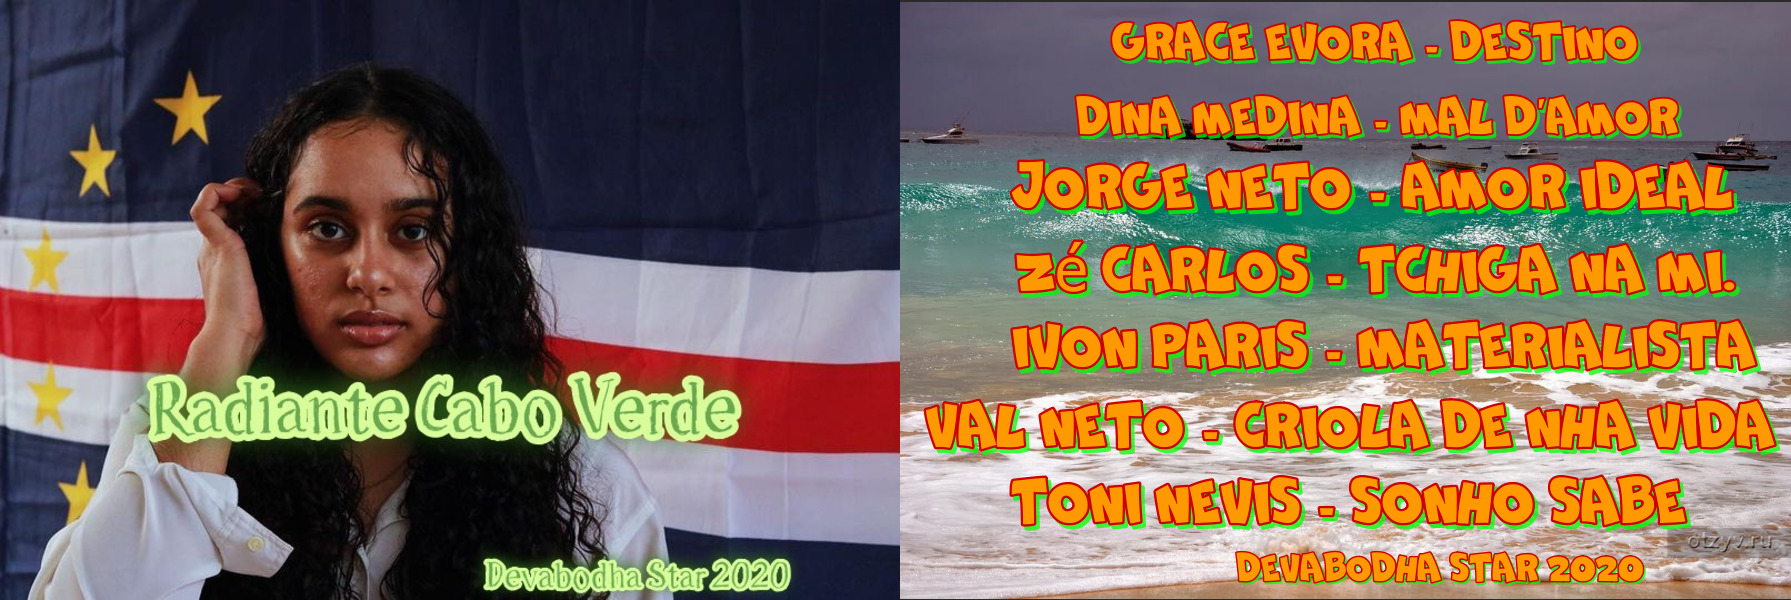 Devabodha prsente: Radiante Cabo Verde 2020 We3hpnyk